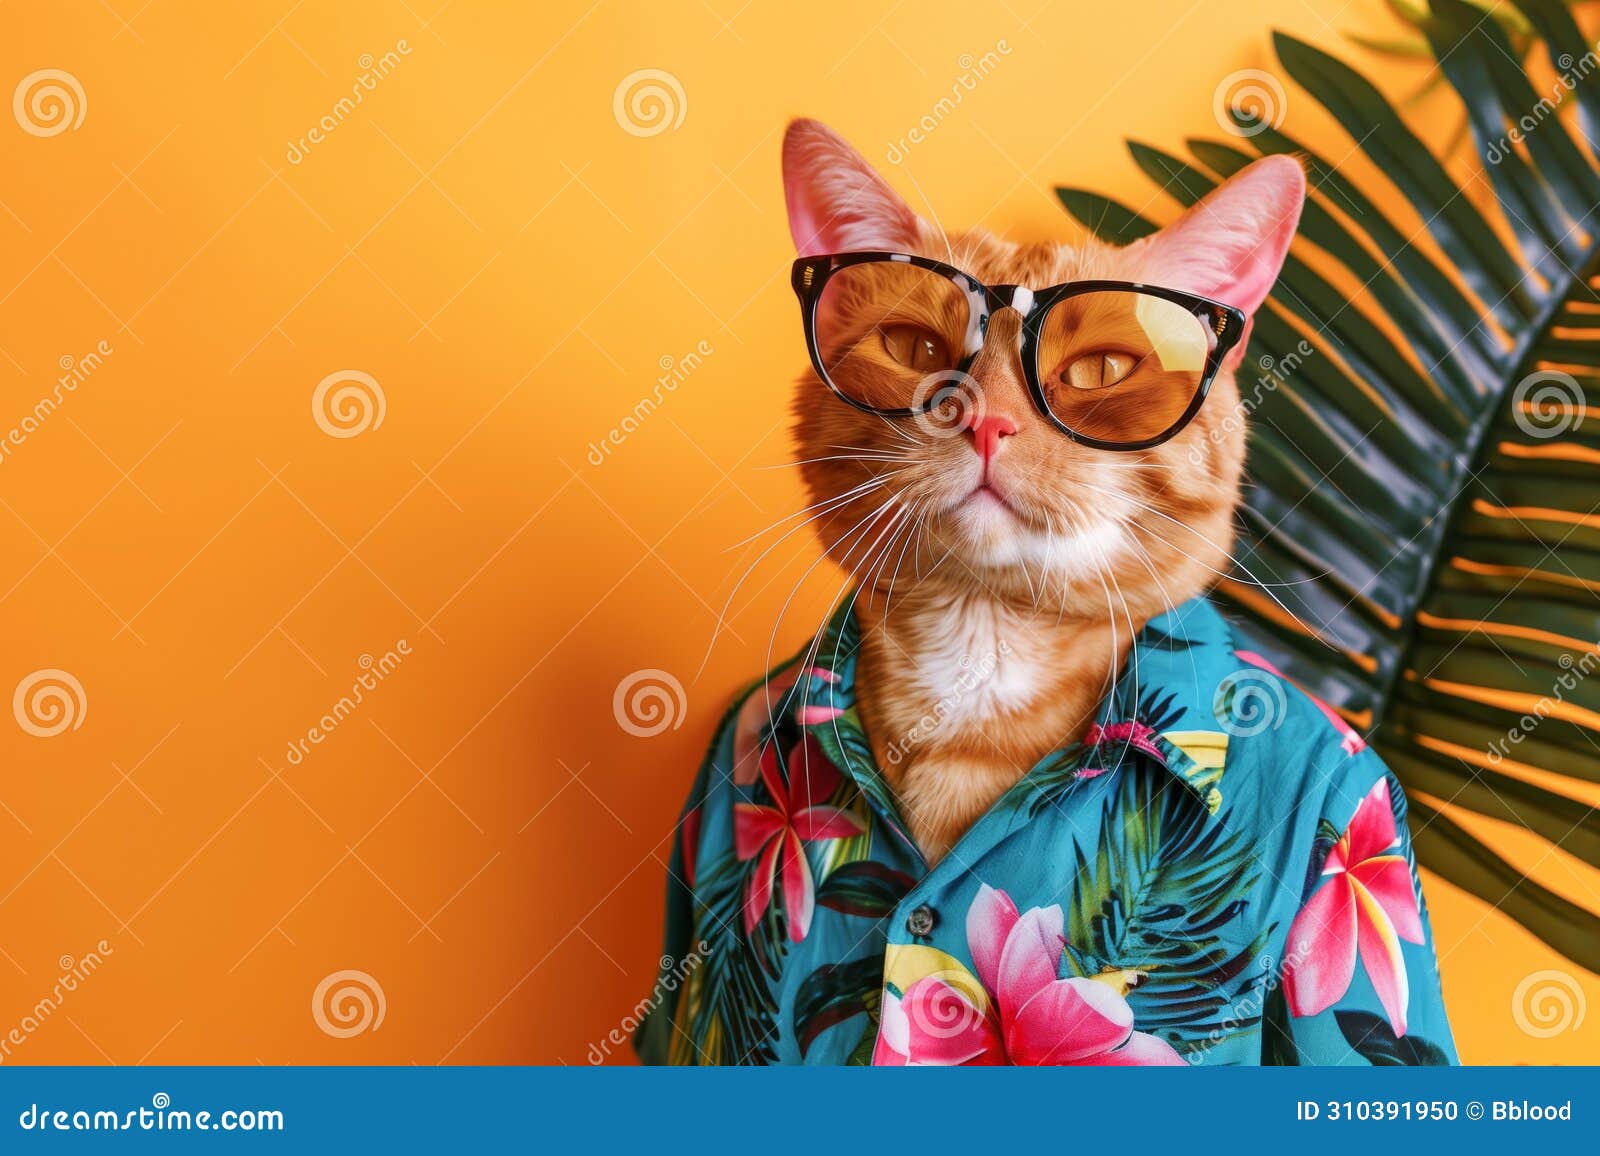 stylish orange cat with trendy glasses and shirt